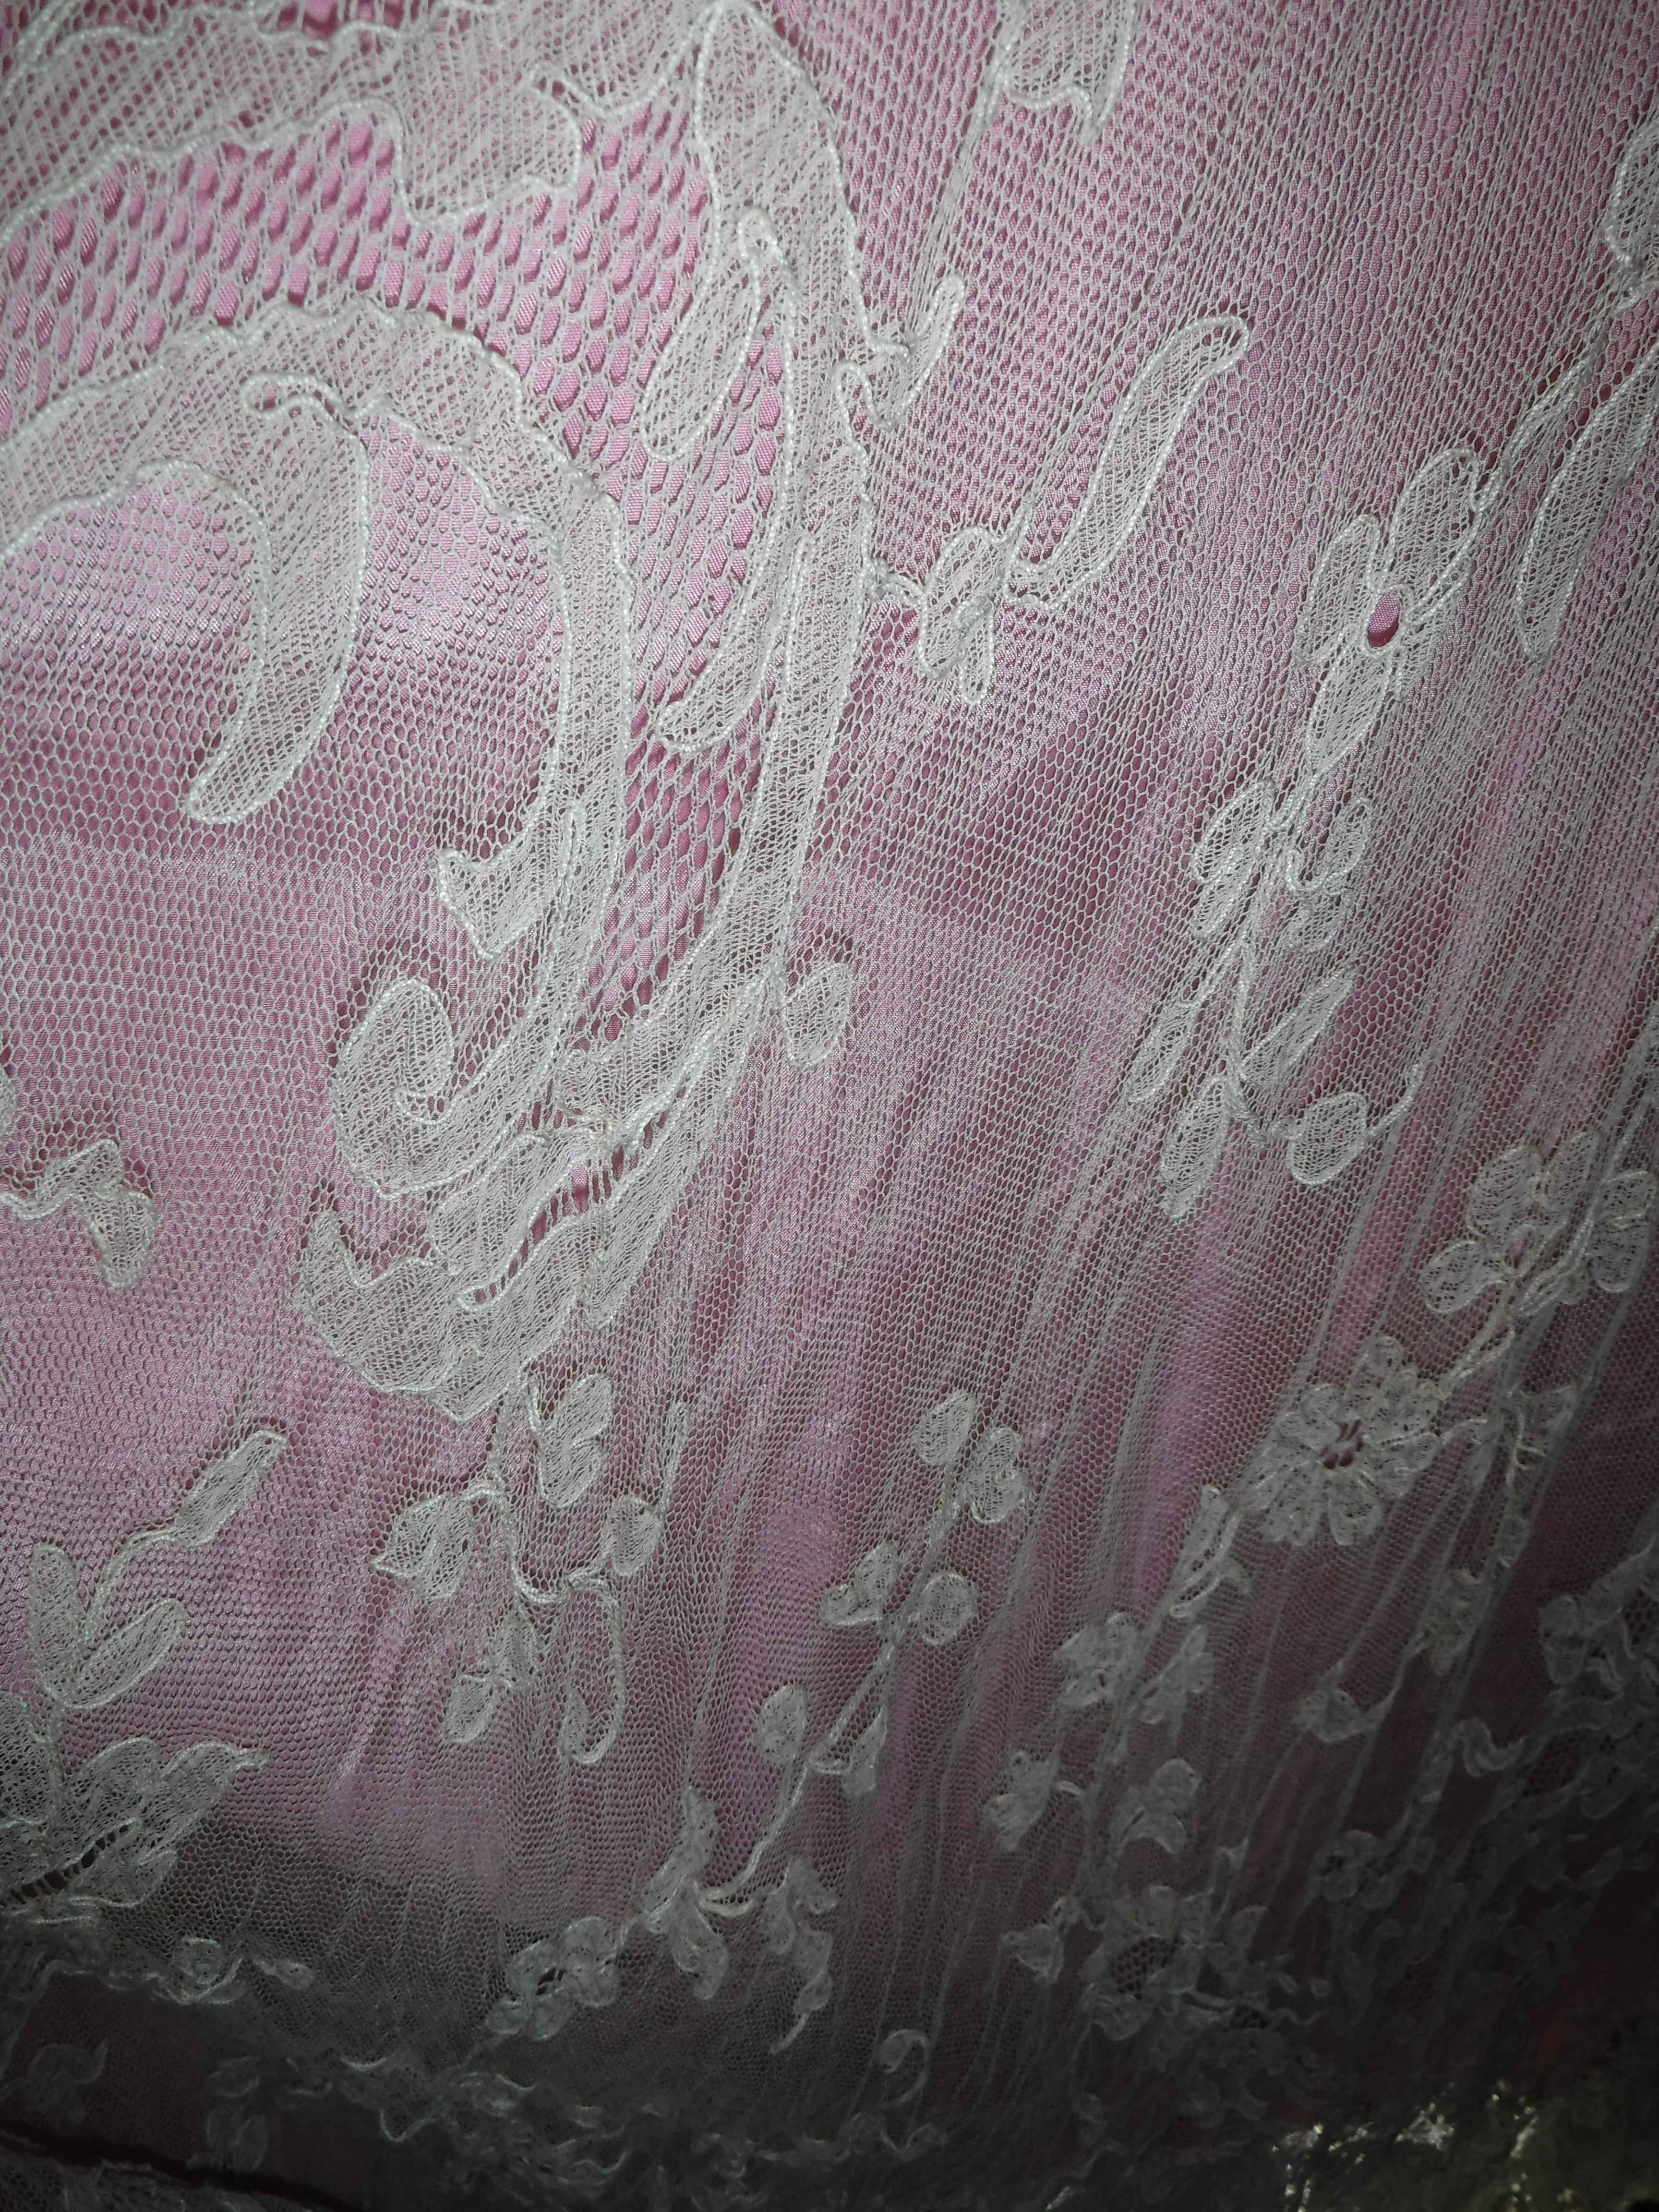 A VINTAGE EDWARDIAN STYLE NOTTINGHAM LACE DRESS, over a pink under slip - Image 4 of 4